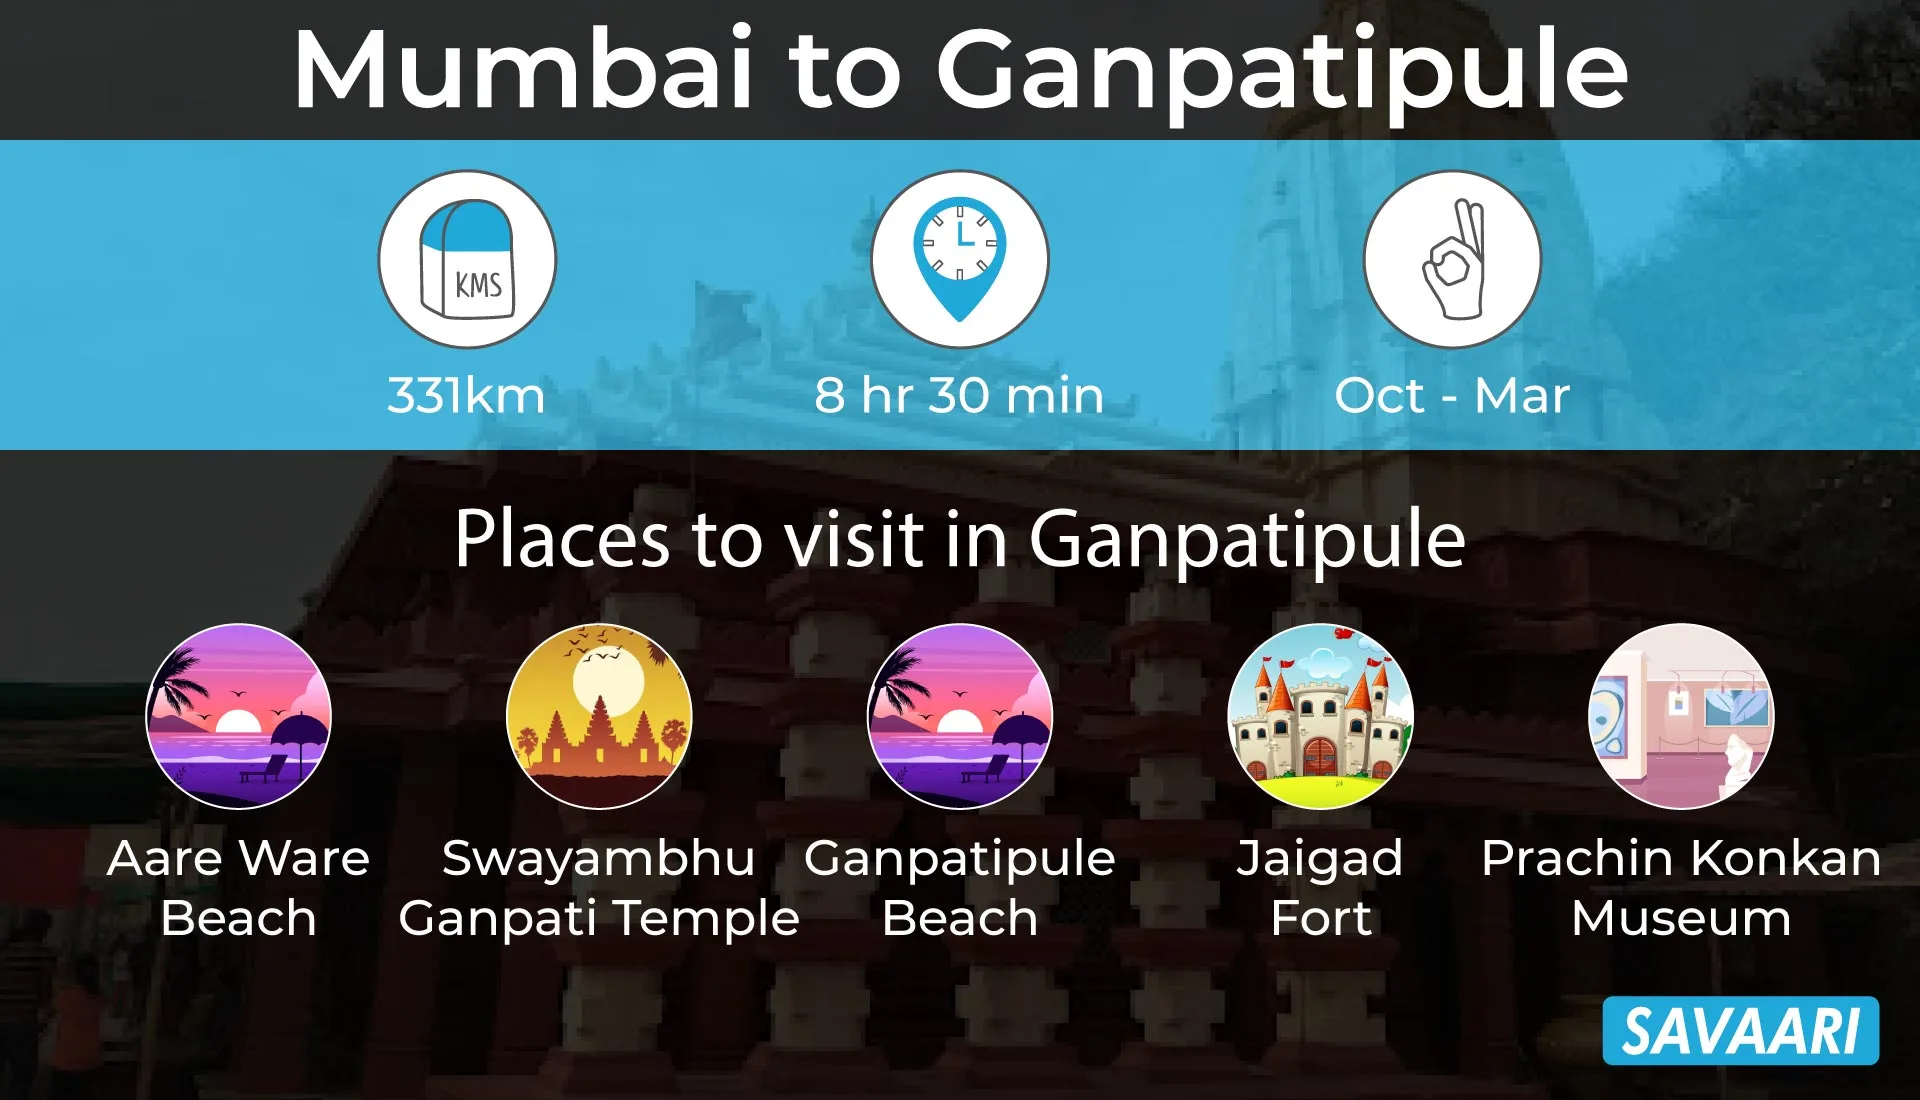 Mumbai to Ganpatipule road trip